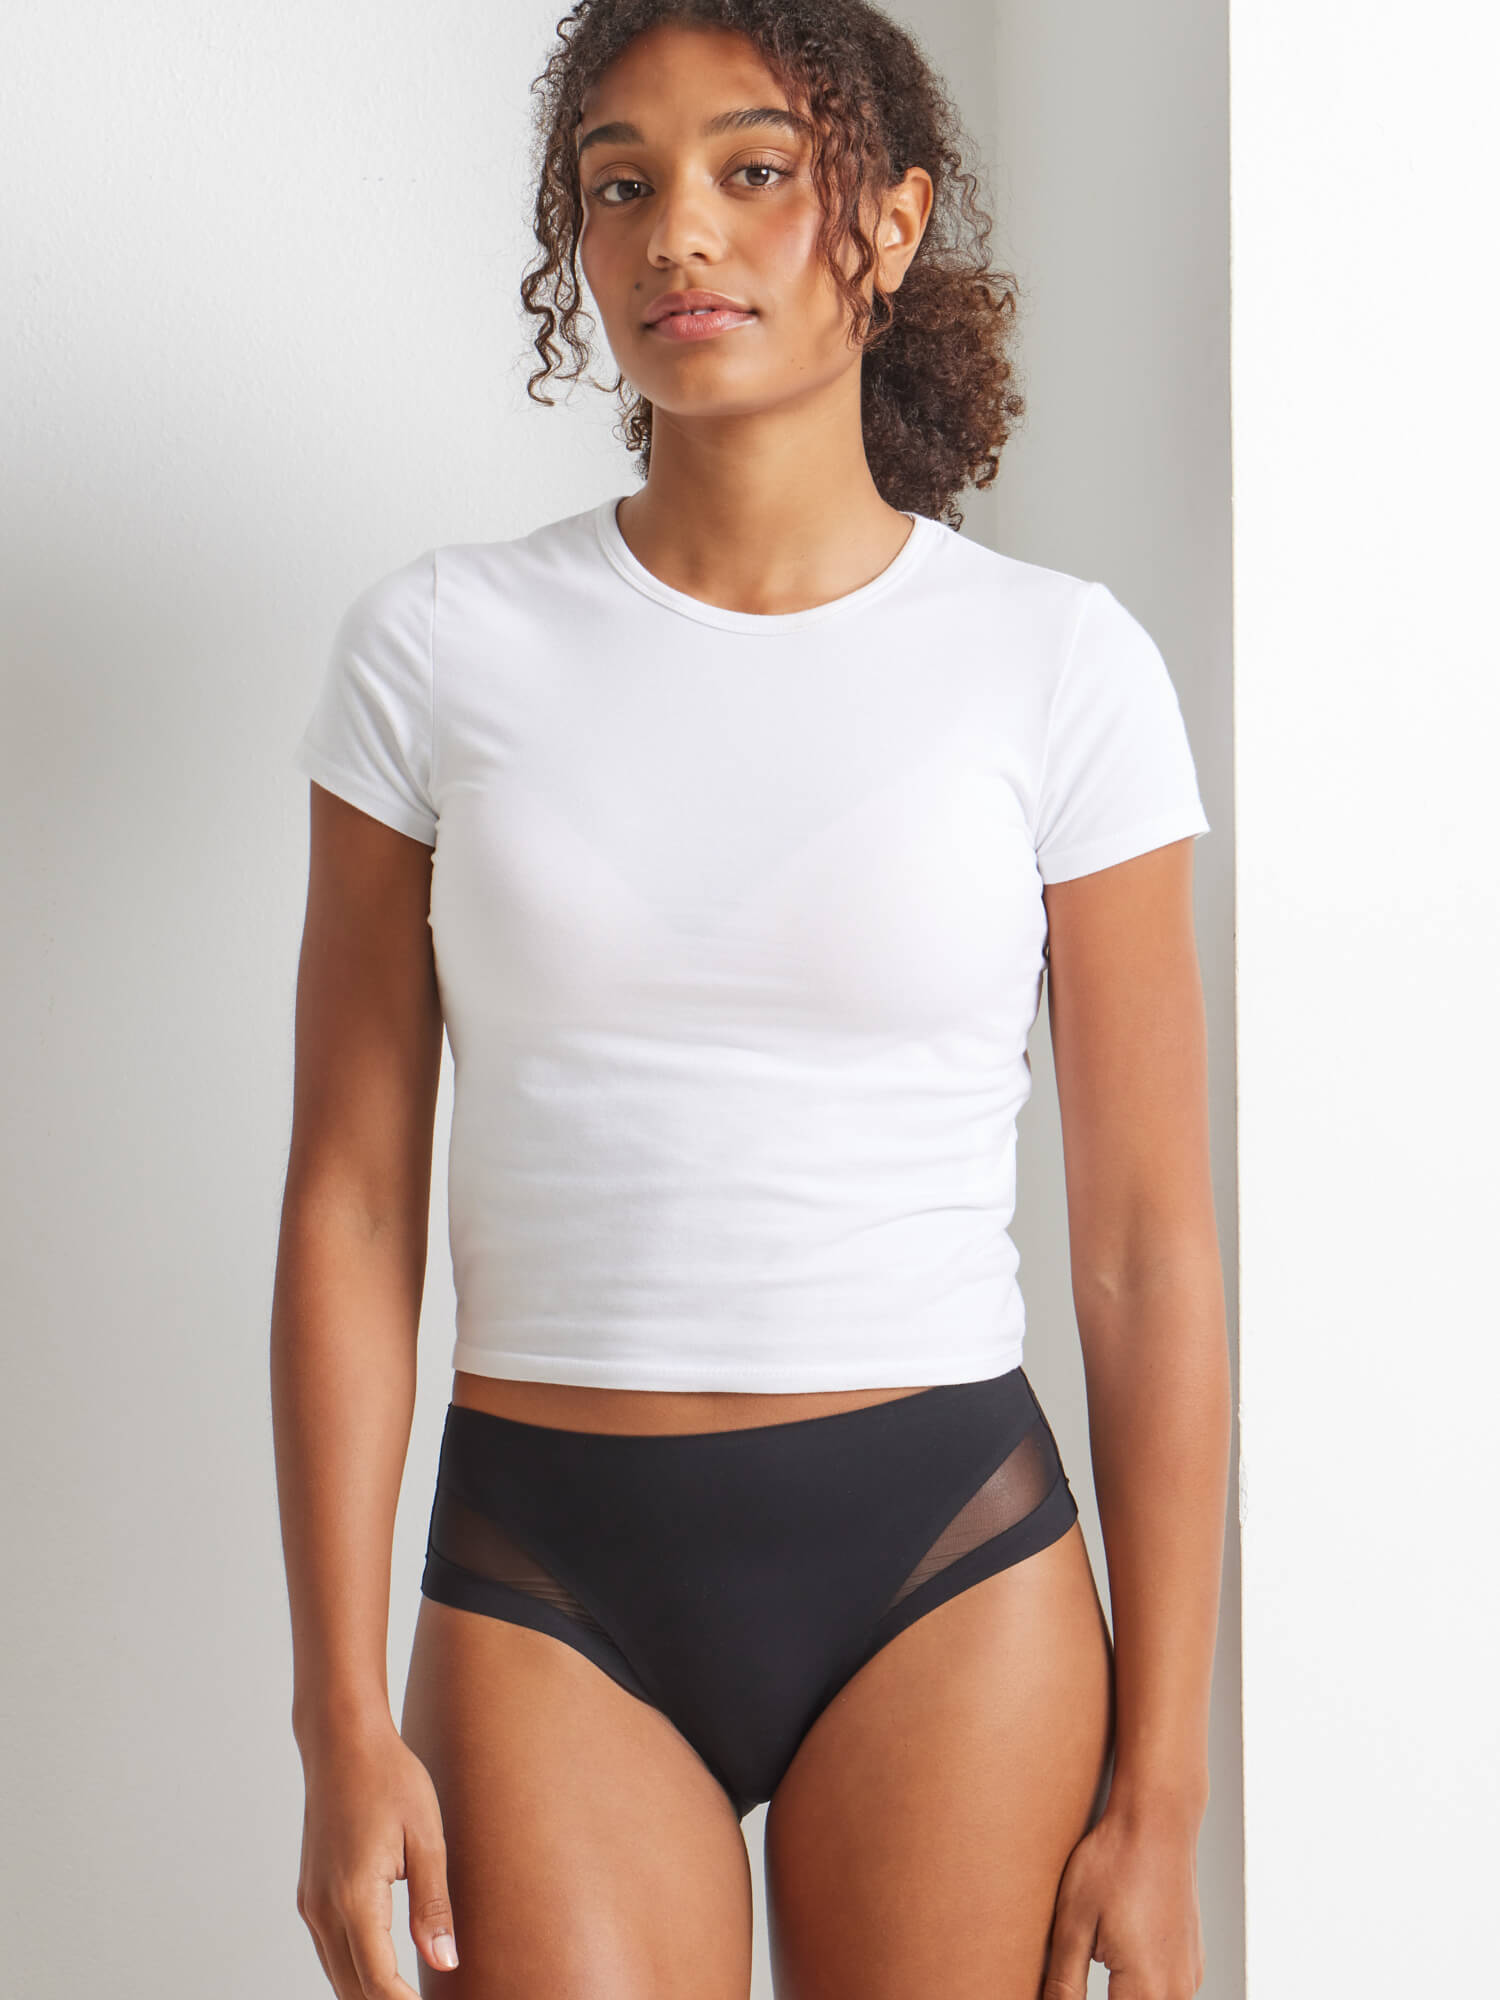 Sleek & Smooth High Cut Underwear in Black - Kayser Lingerie